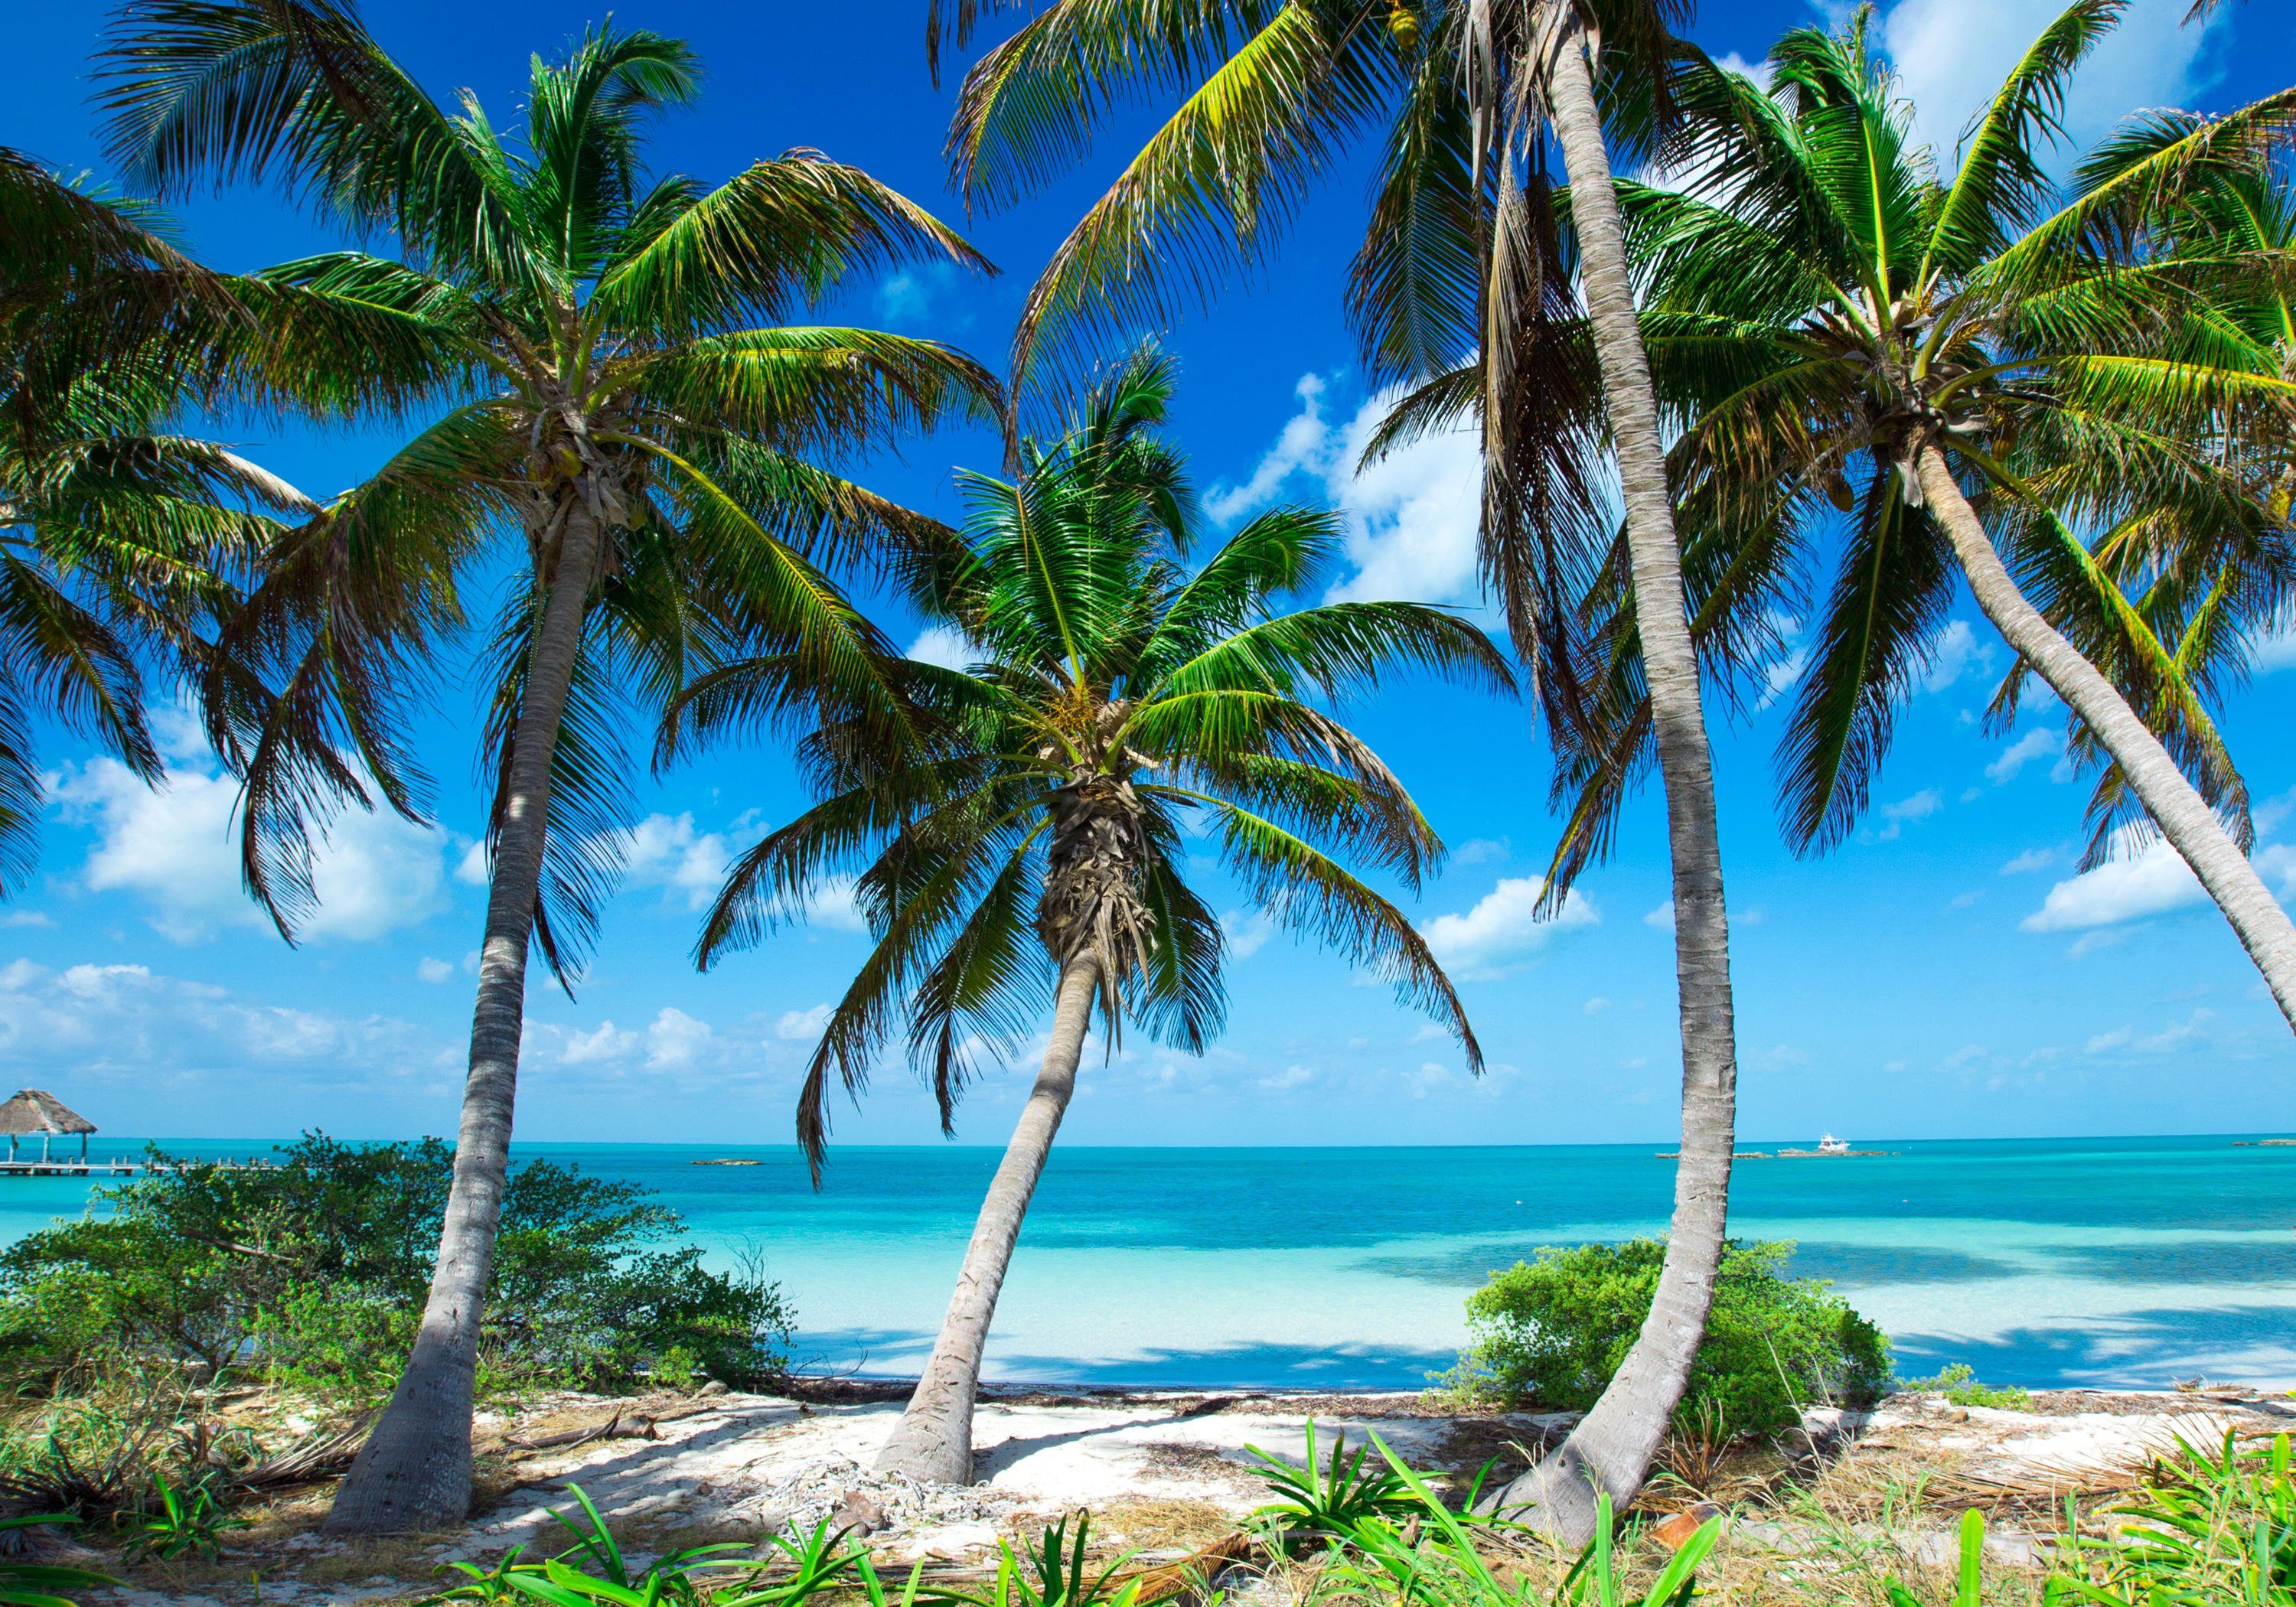 wandmotiv24 Fototapete Palmen an tropischem Strand, glatt, Wandtapete, Motivtapete, matt, Vliestapete